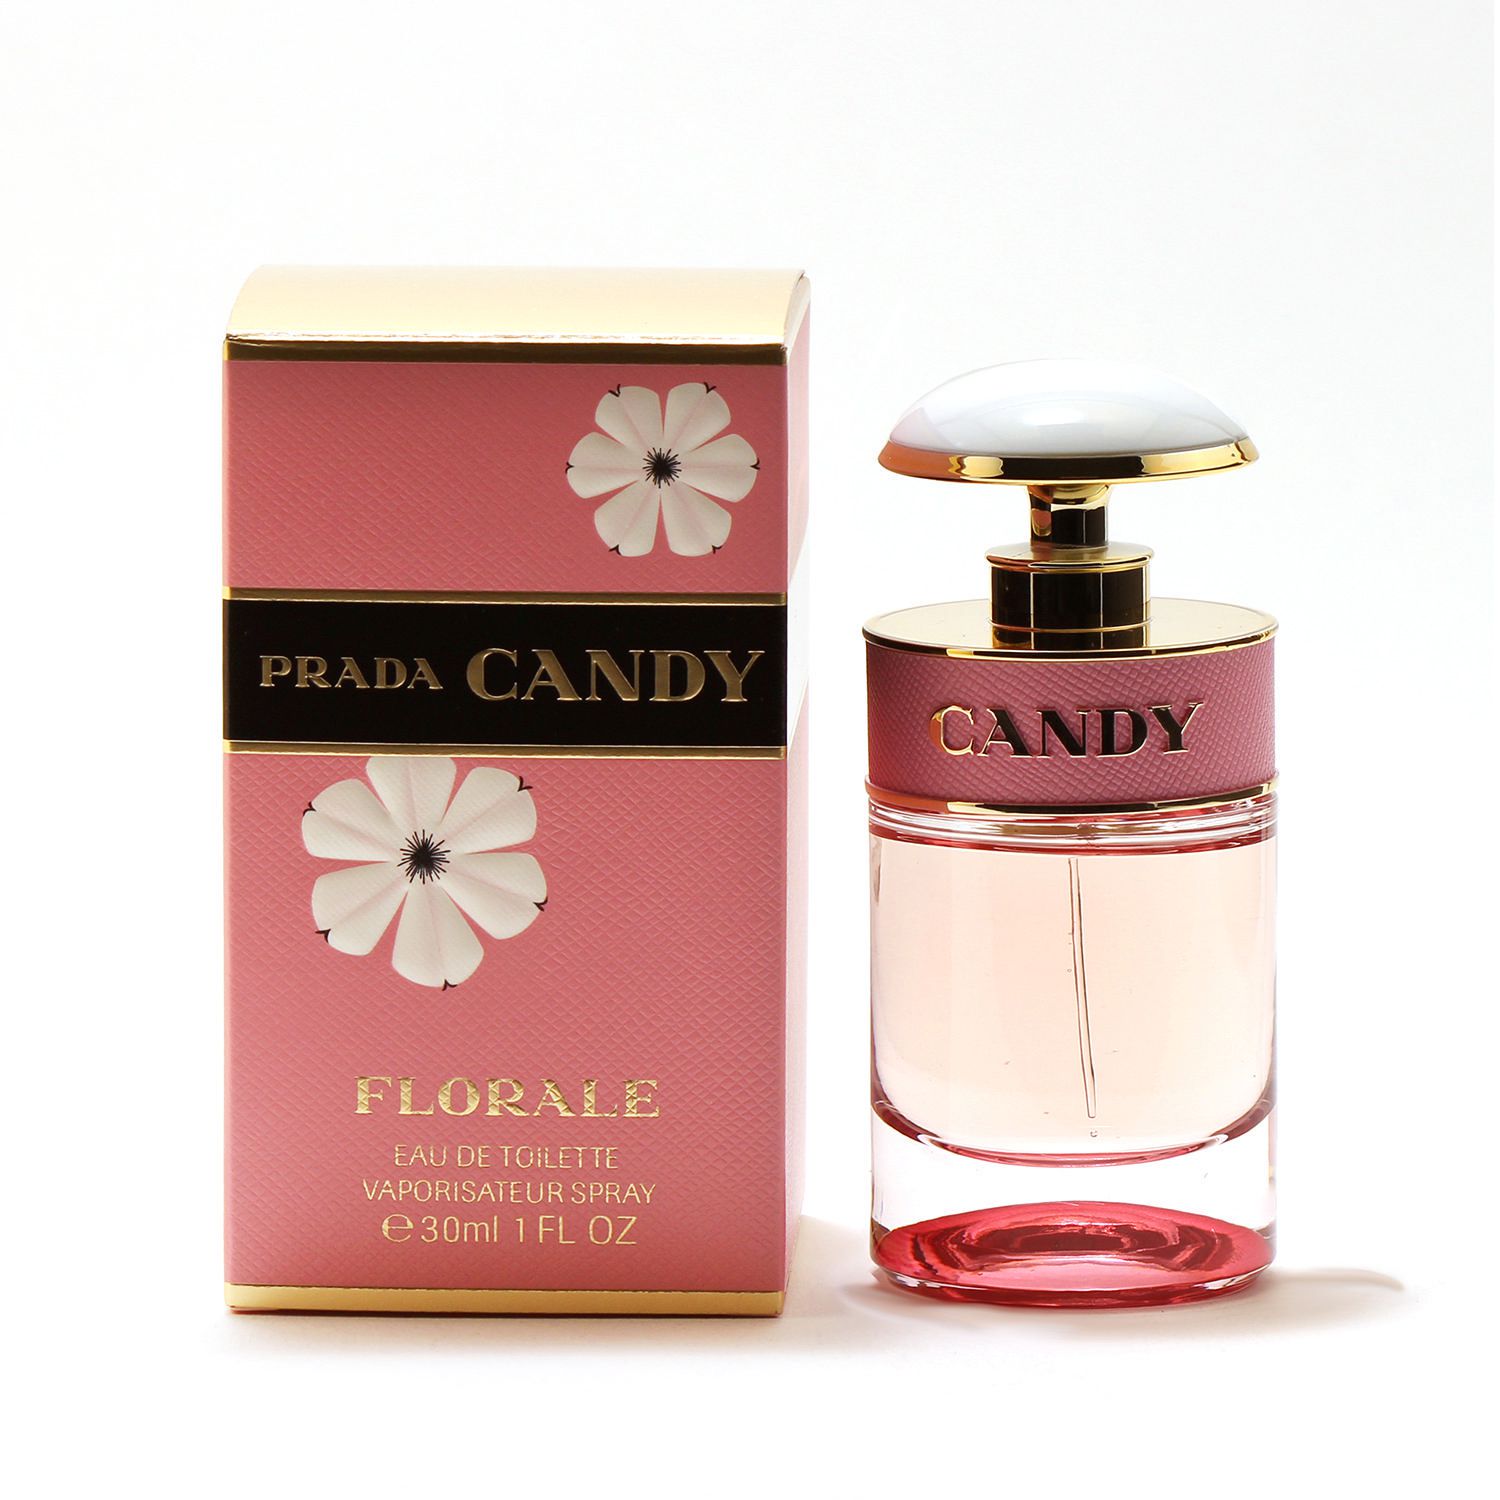 prada candy florale perfume